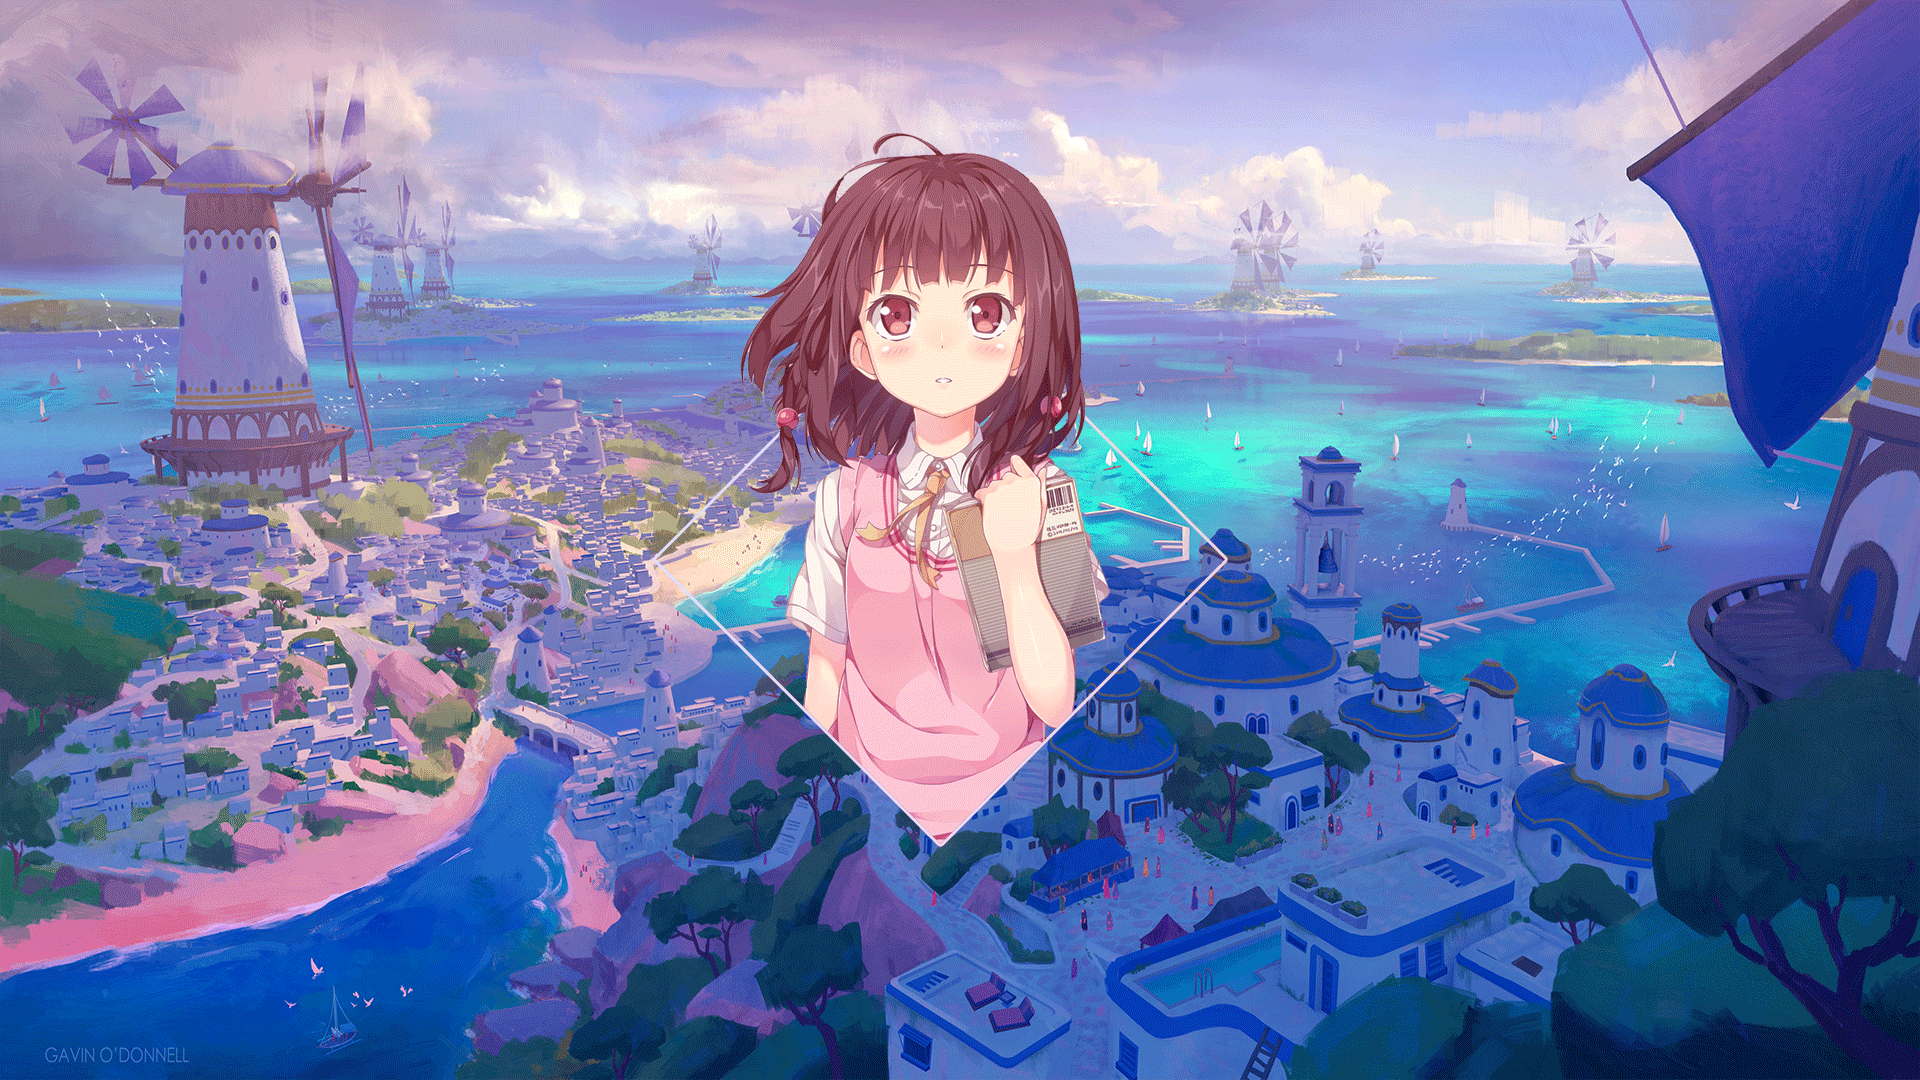 Anime, School Uniform, Landscape, Sea, City, Photohop, Digital Art, Anime Girls, Blue Blouse, Picture In Picture Gallery HD Wallpaper